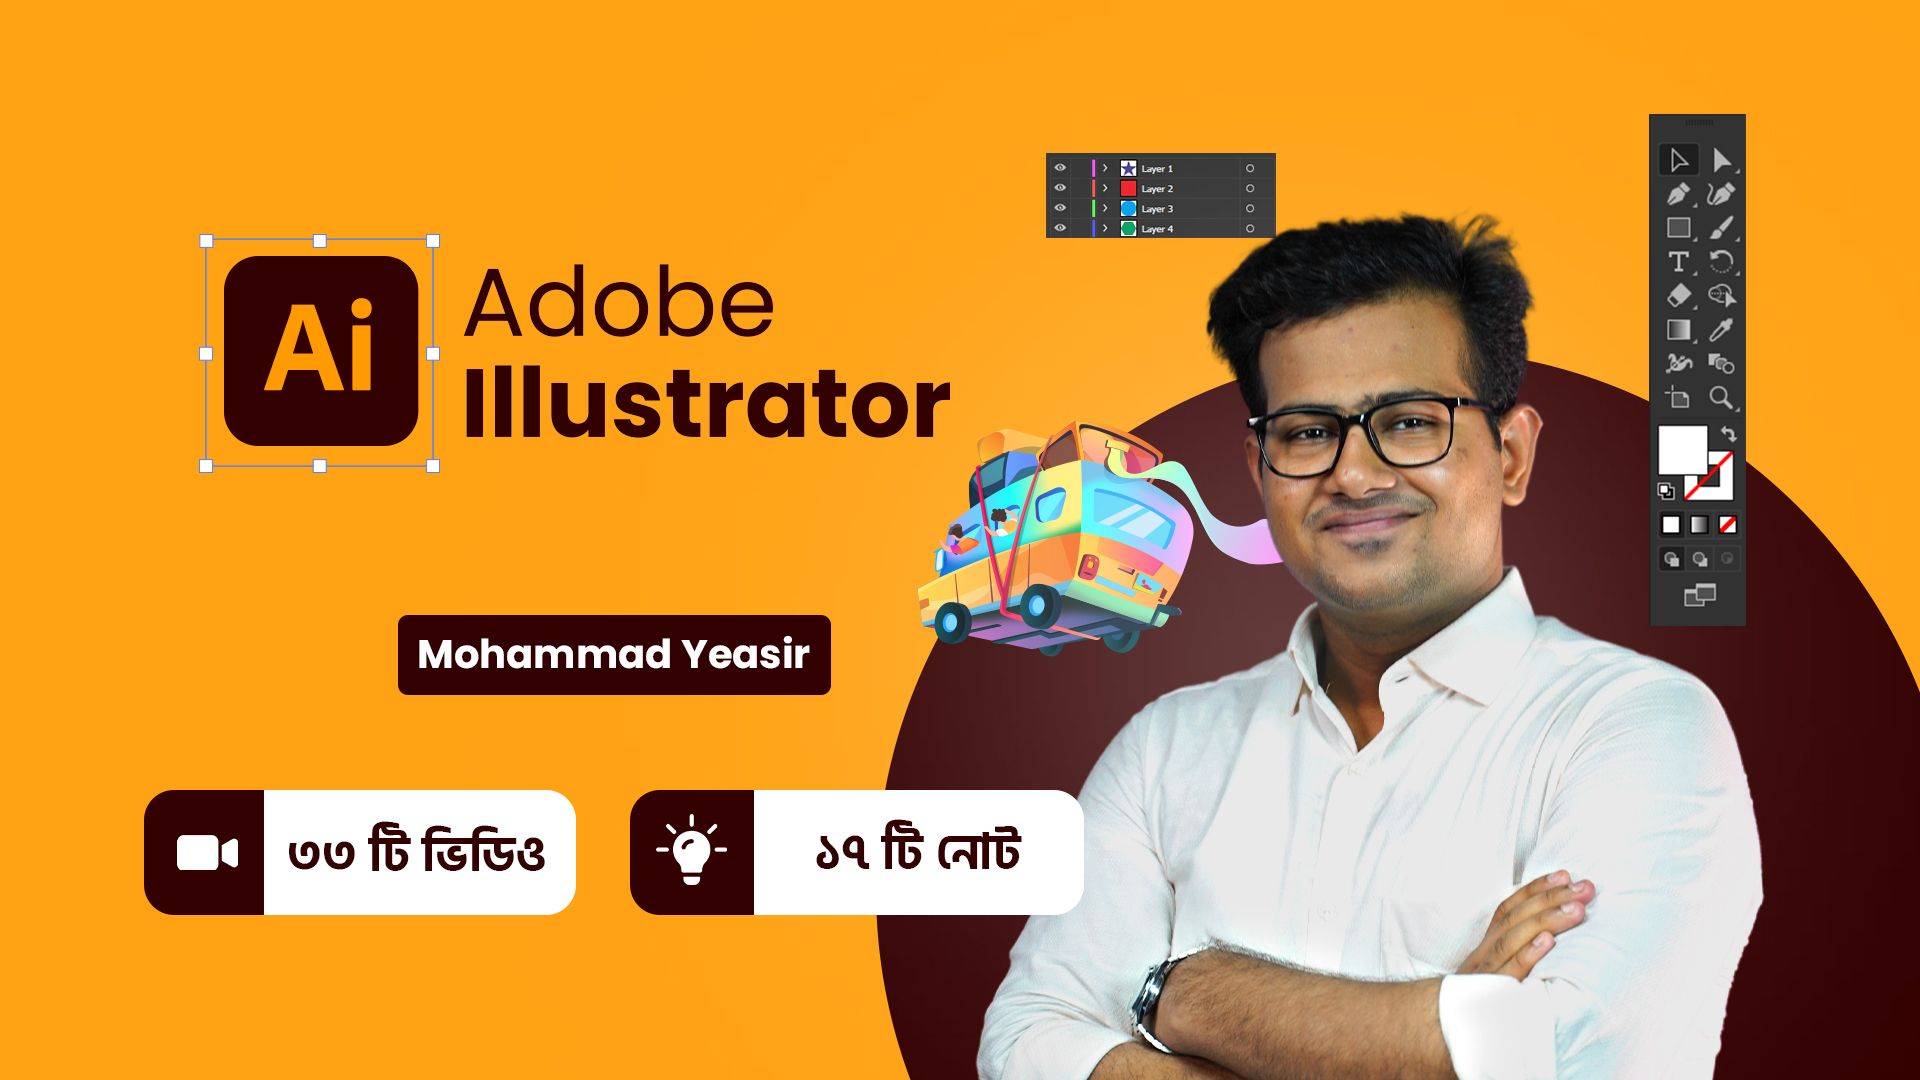 Adobe Illustrator Graphic Design course with Illustrator tutorials